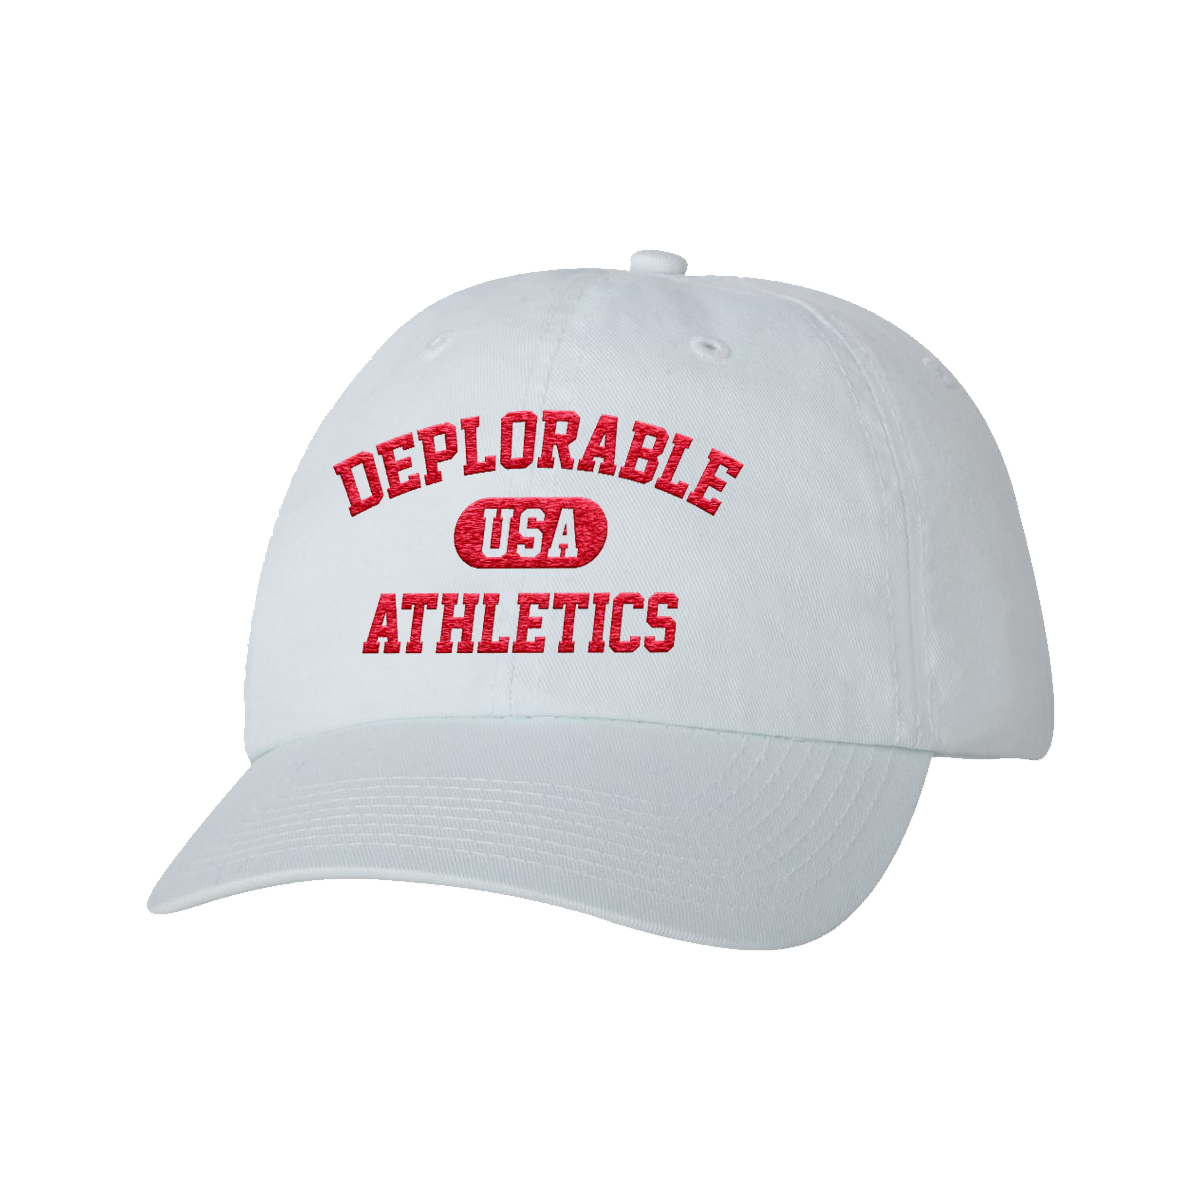 Deplorable Athletics Hat - White